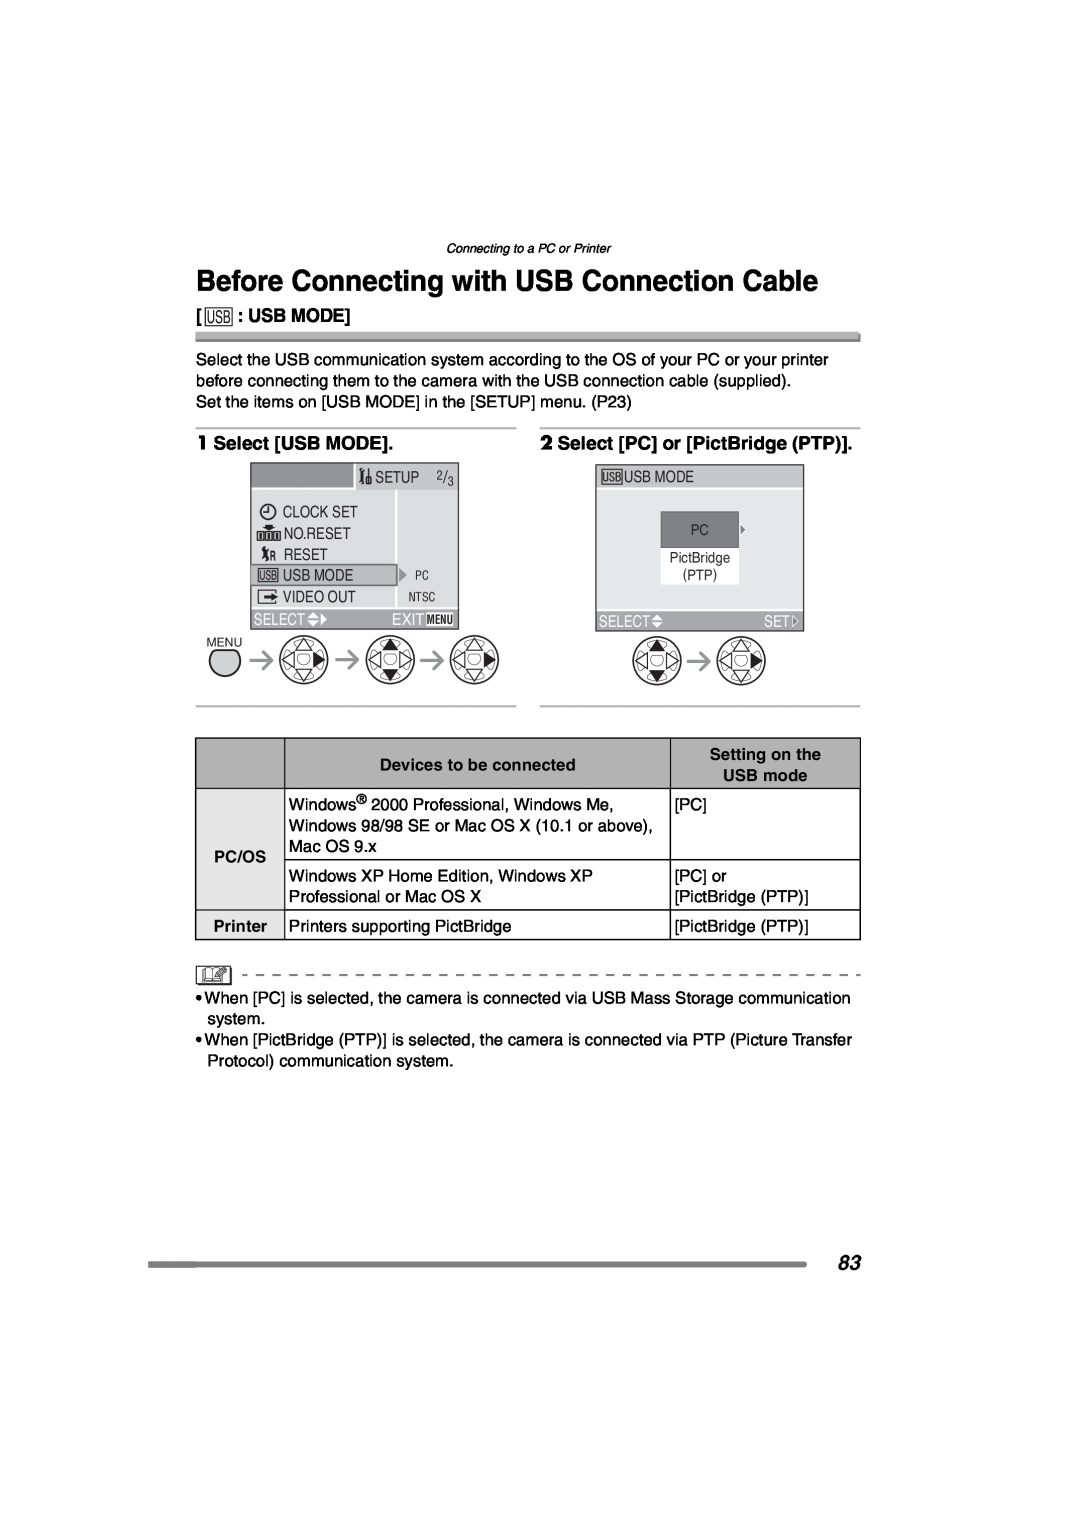 Panasonic DMCFX7 Before Connecting with USB Connection Cable, Usb Mode, Select USB MODE, Select PC or PictBridge PTP 